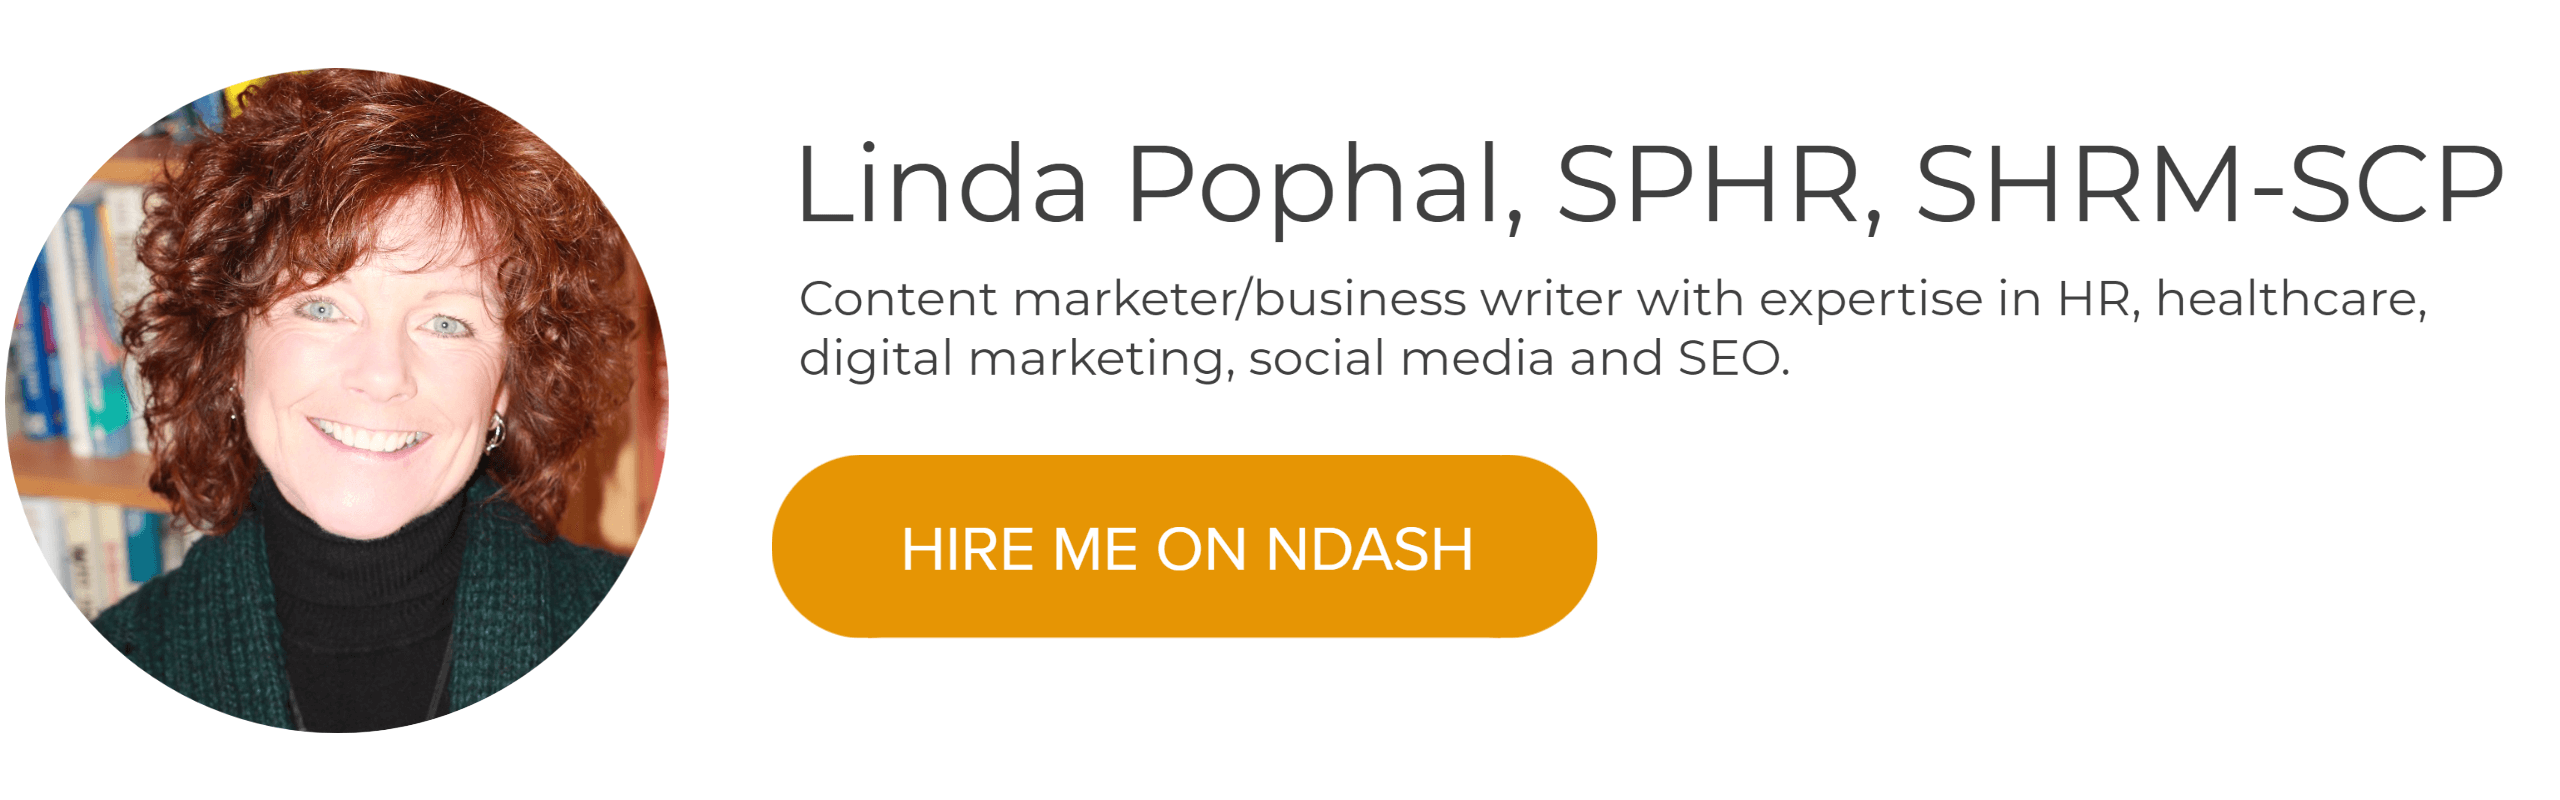 Linda Pophal, SPHR, SHRM-SCP: Content Marketer & Business Writer